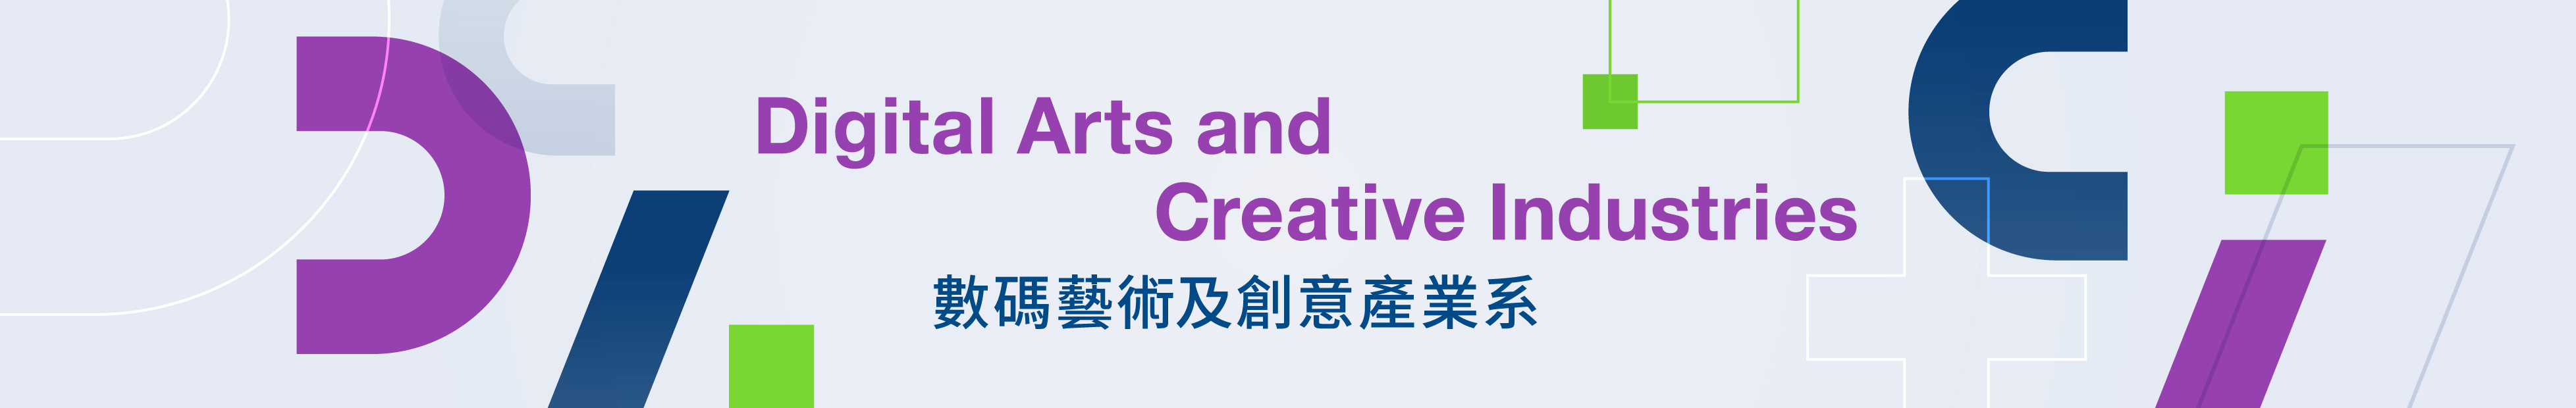 Department of Digital Arts and Creative Industries (DA+CI)